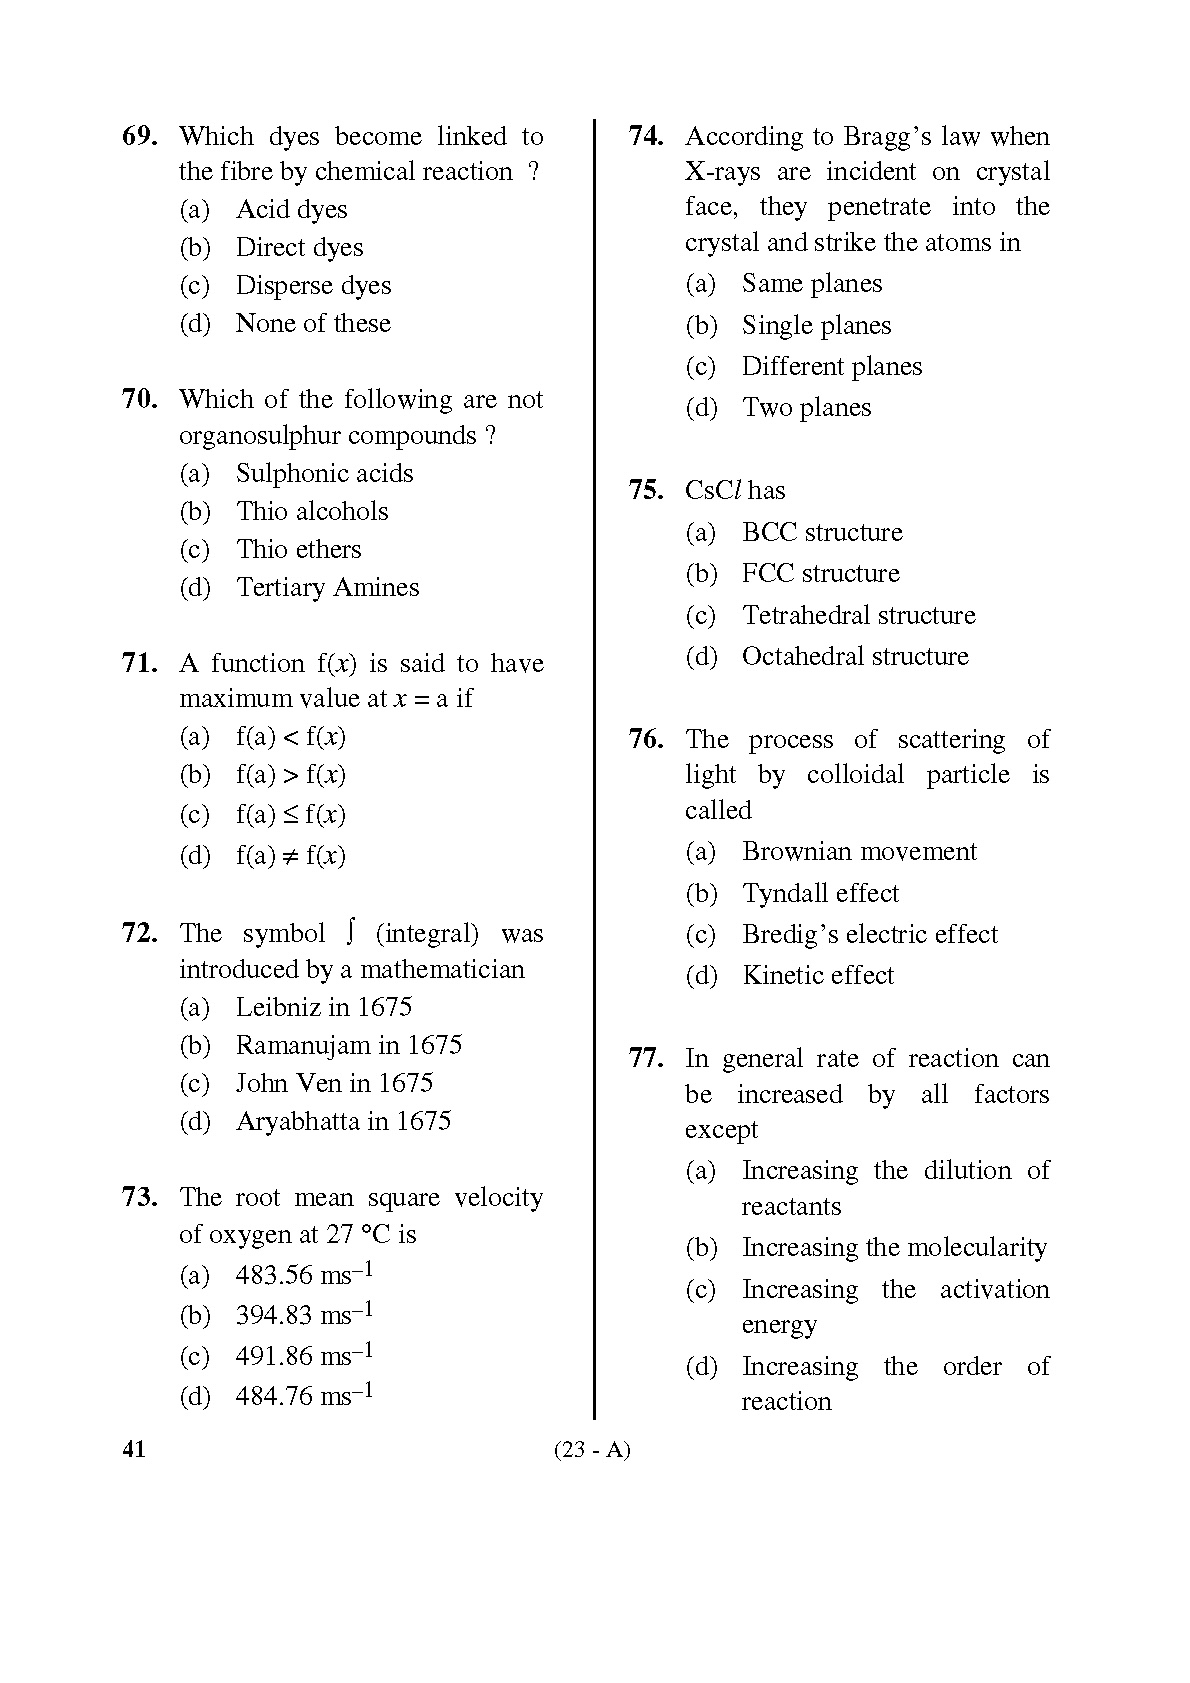 Karnataka PSC Drugs Analyst Chemistry Exam Sample Question Paper 23